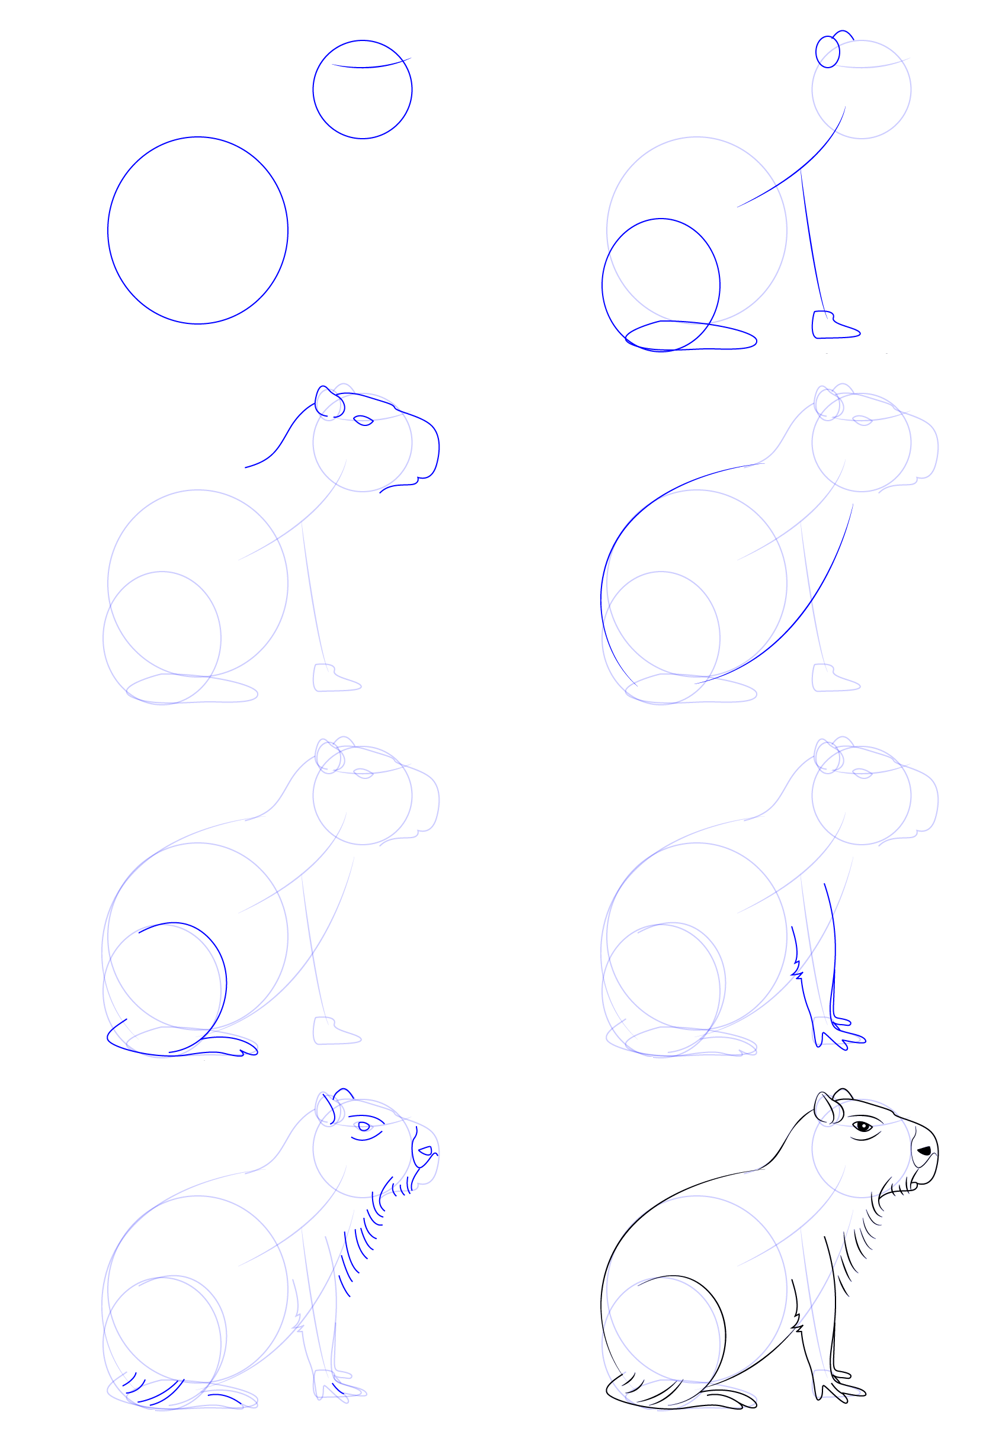 Capybara drawing simple (3) Drawing Ideas